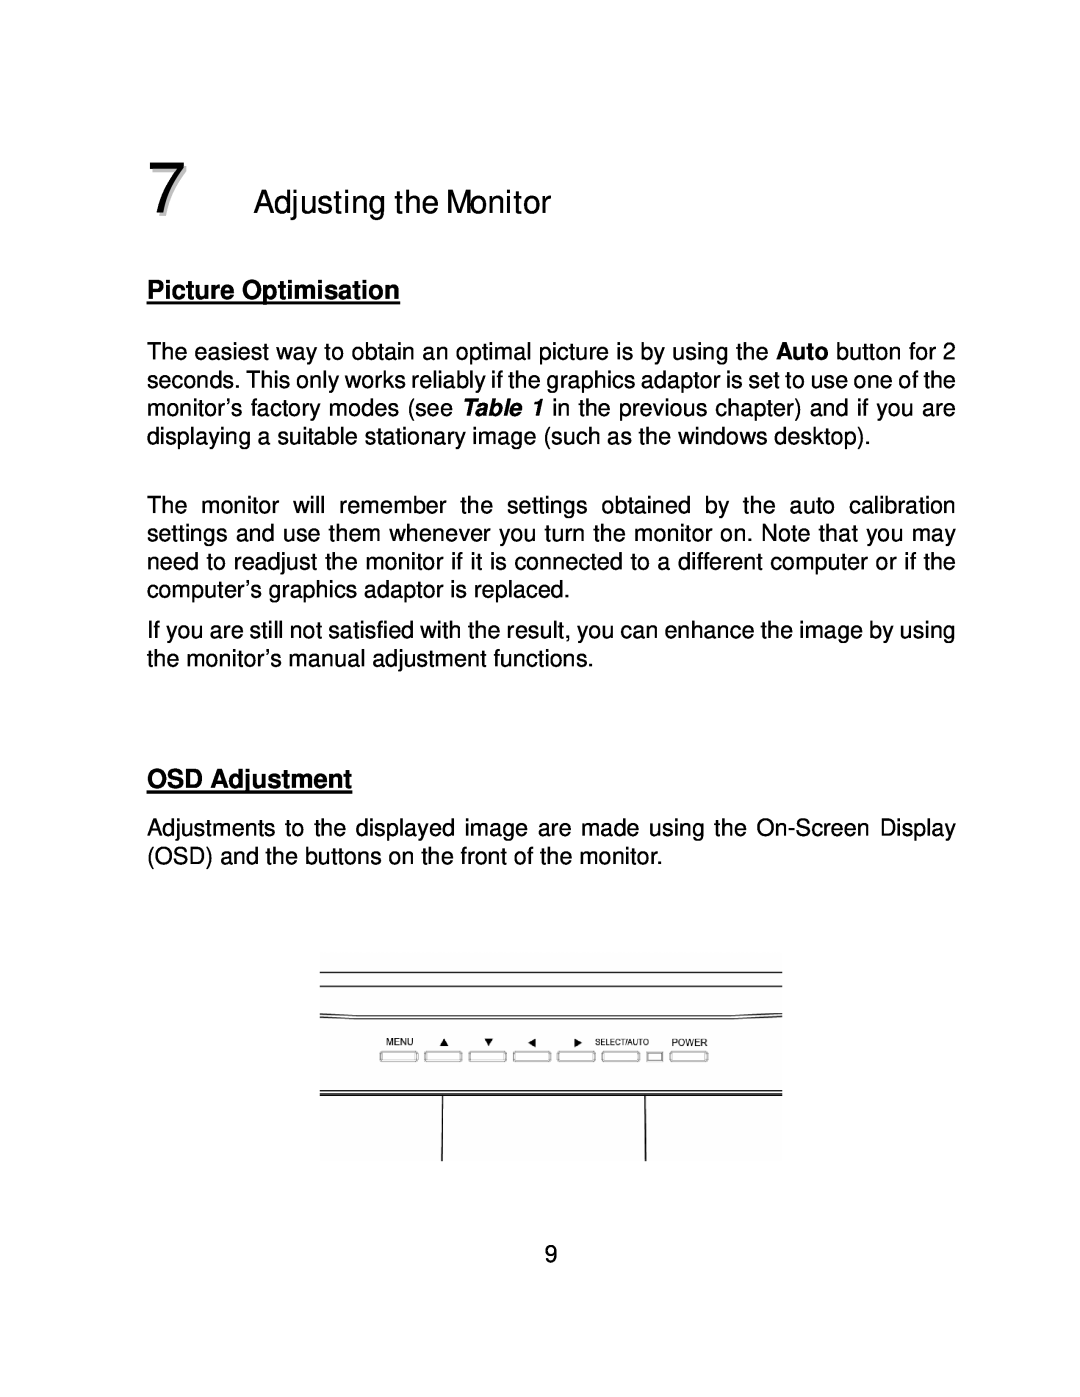 AOC LM740 user manual Adjusting the Monitor, Picture Optimisation, OSD Adjustment 